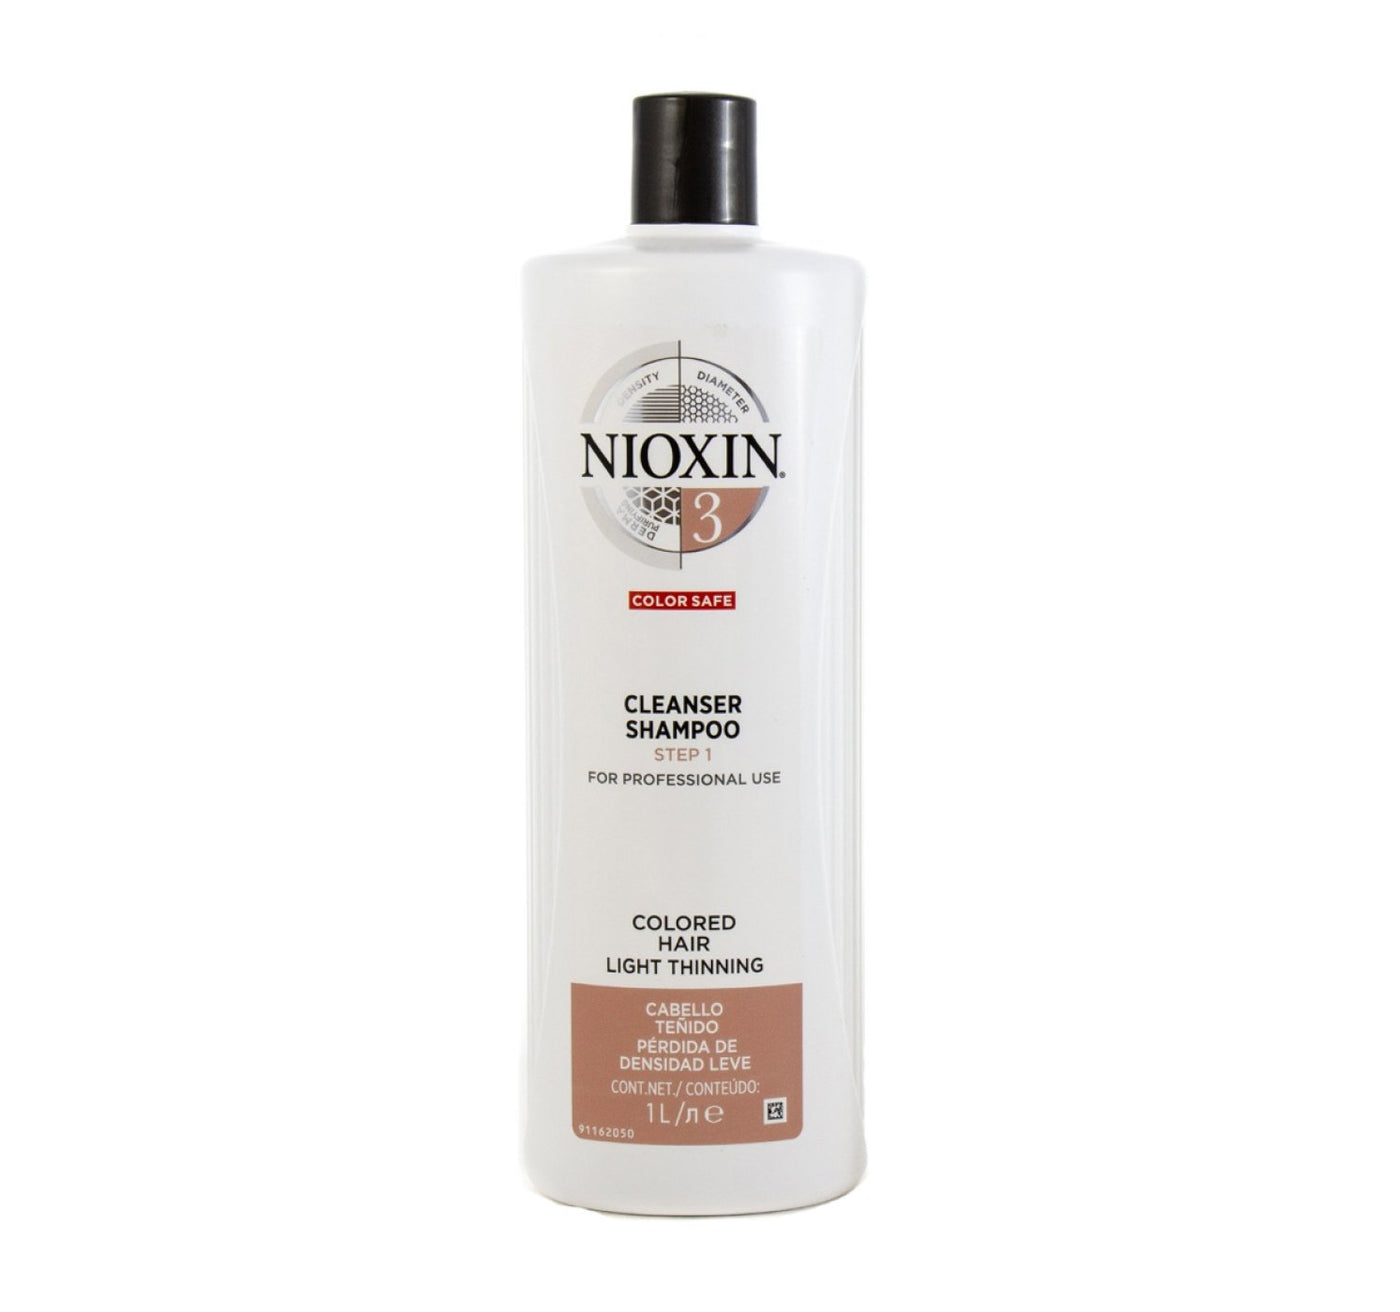 Nioxin System 3 Cleanser Shampoo 1000ml - Salon Warehouse